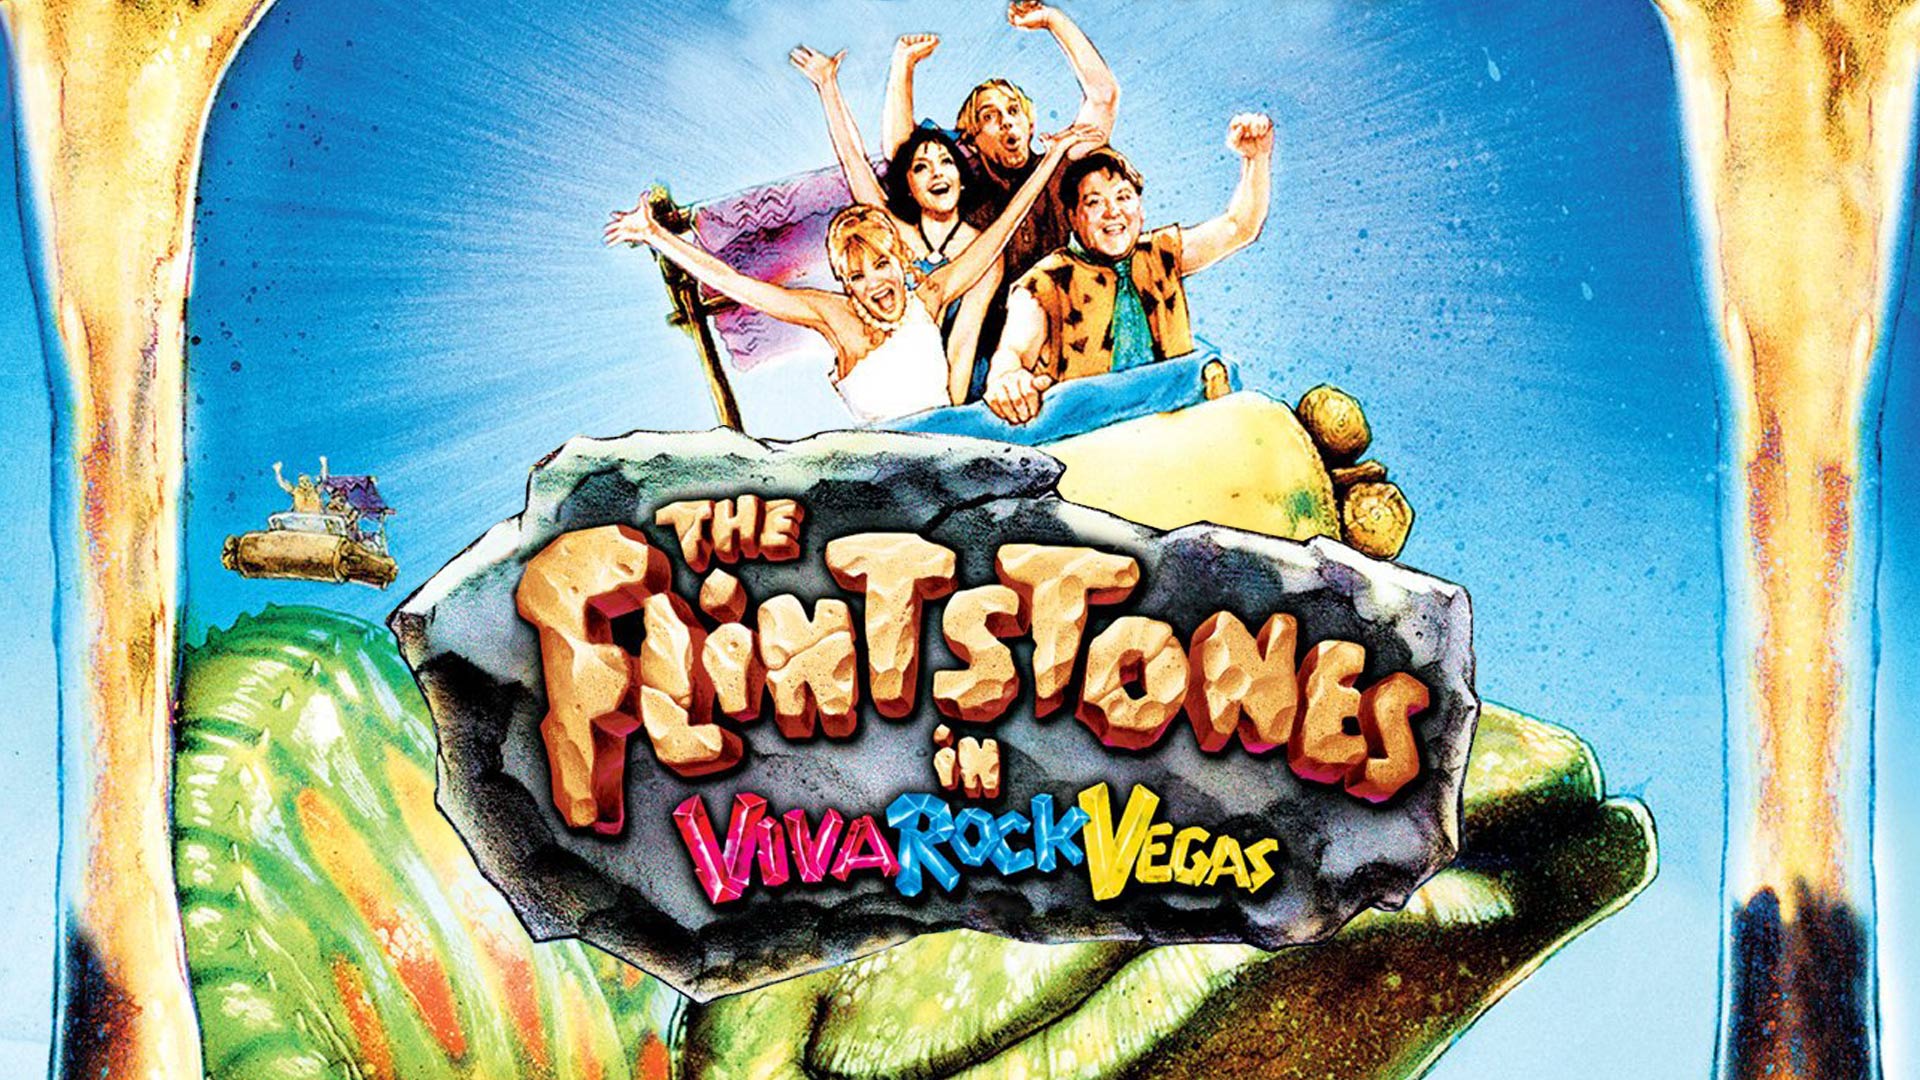 Os Flinstones em Viva Rock Vegas